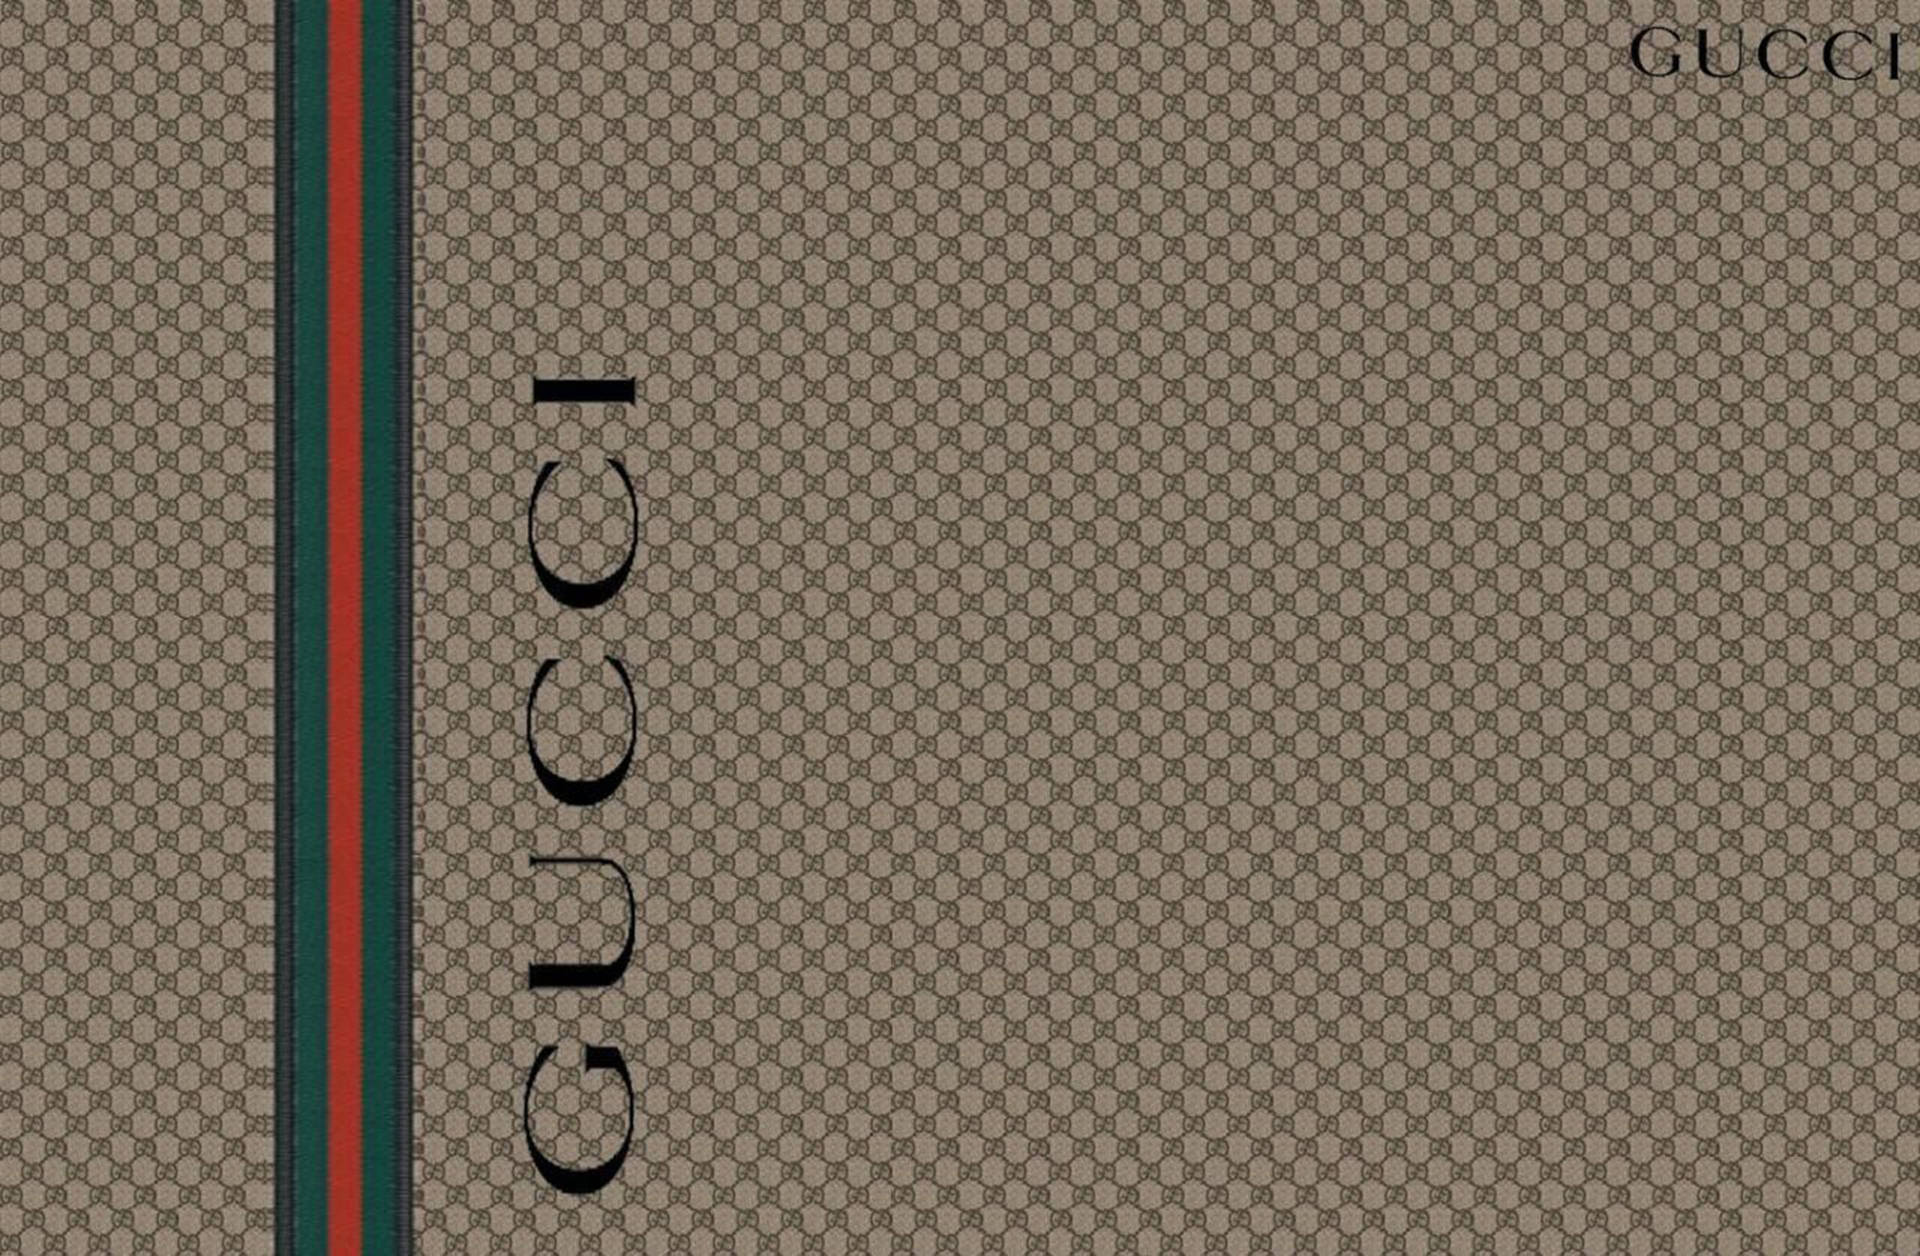 Brown Diamante Gucci Pattern Wallpaper